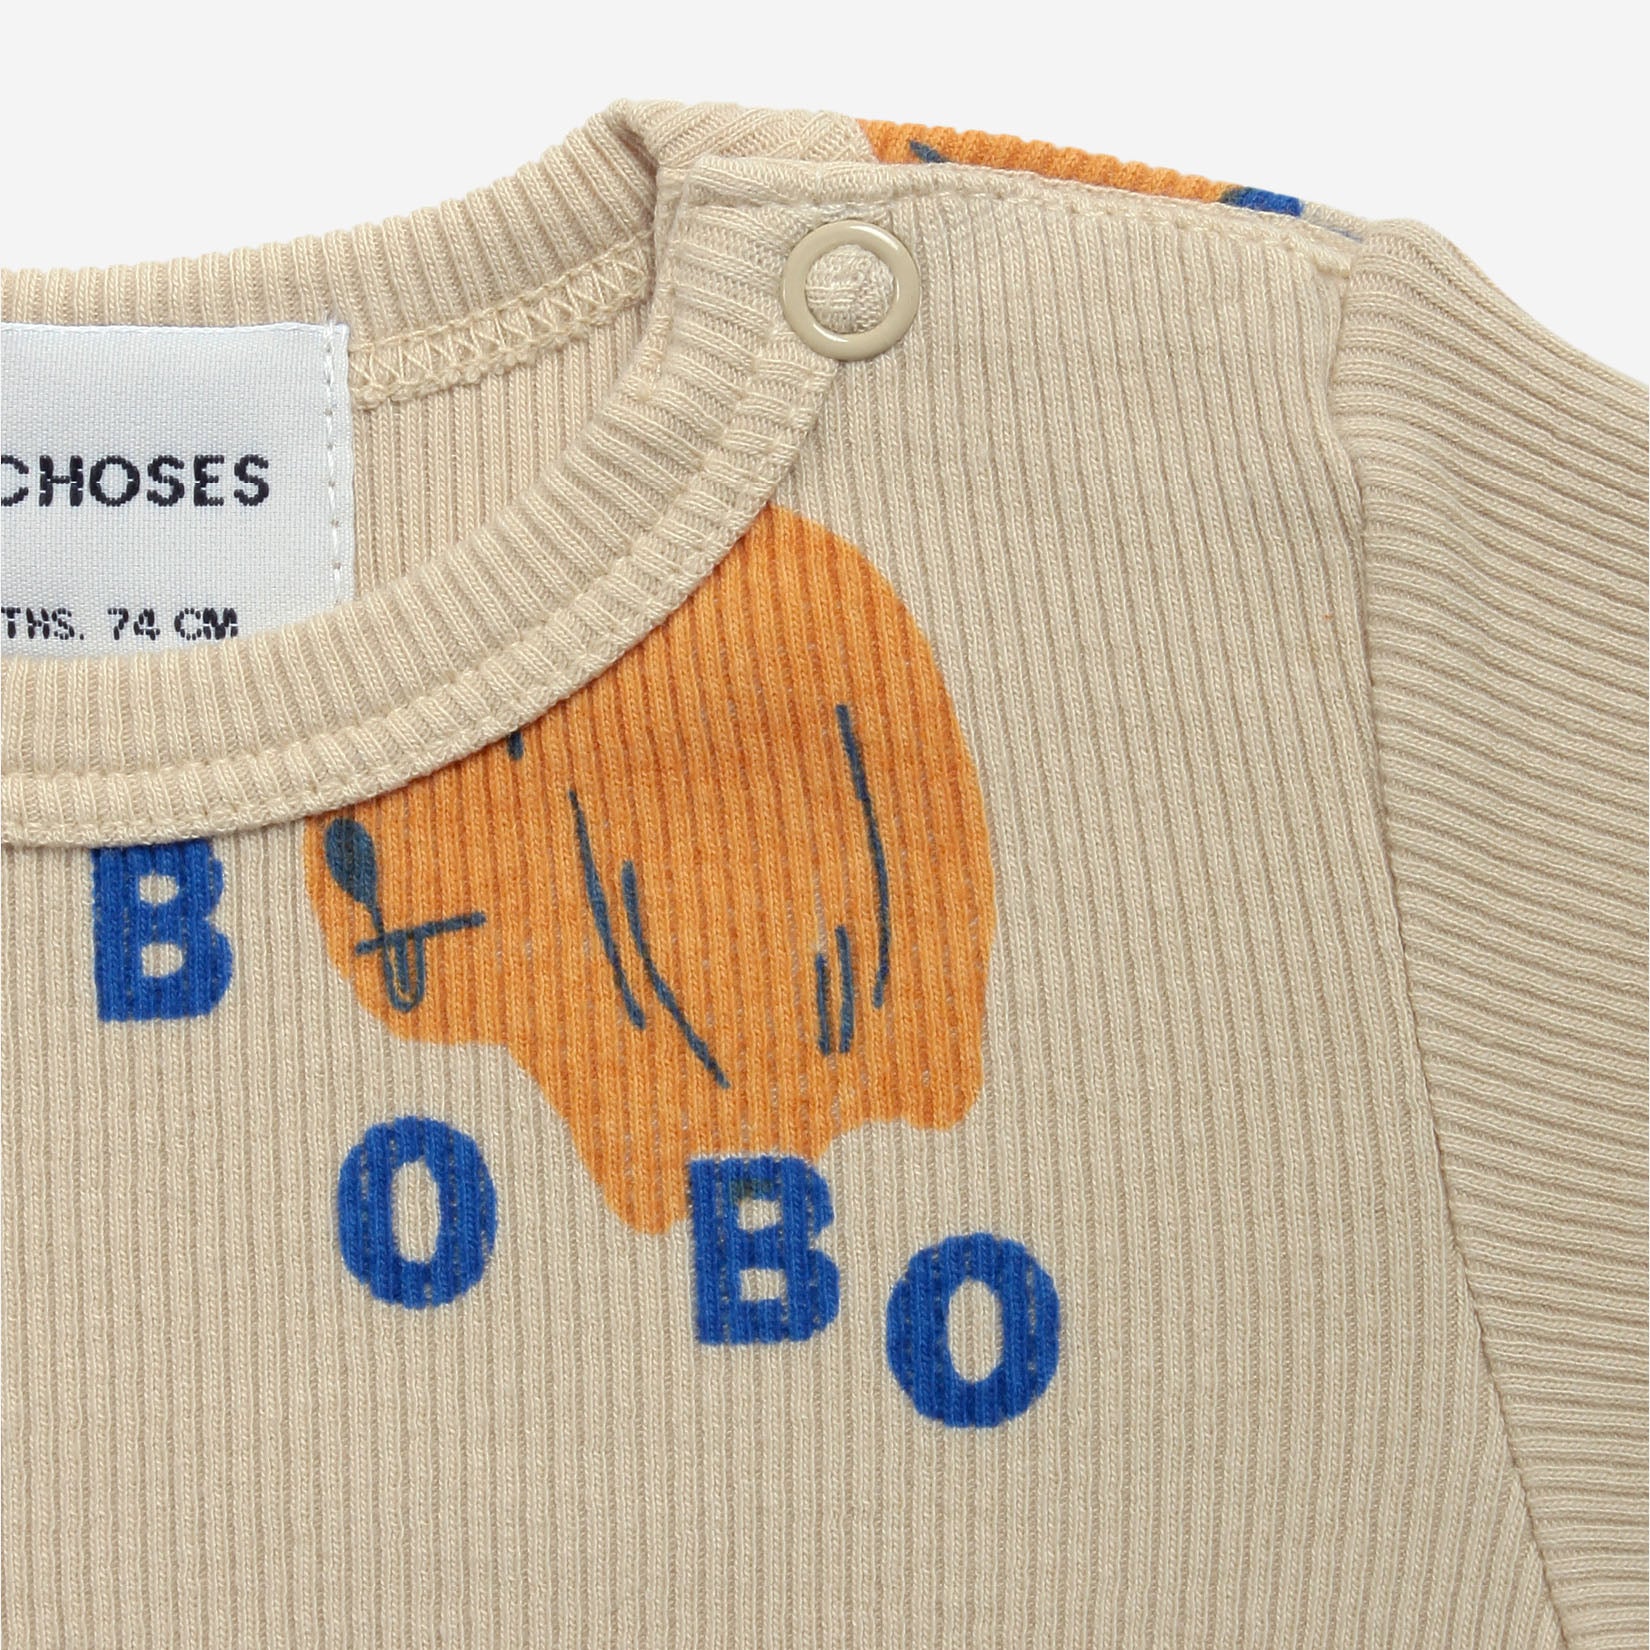 Baby Boys & Girls Beige Printed Cotton Babysuit Set